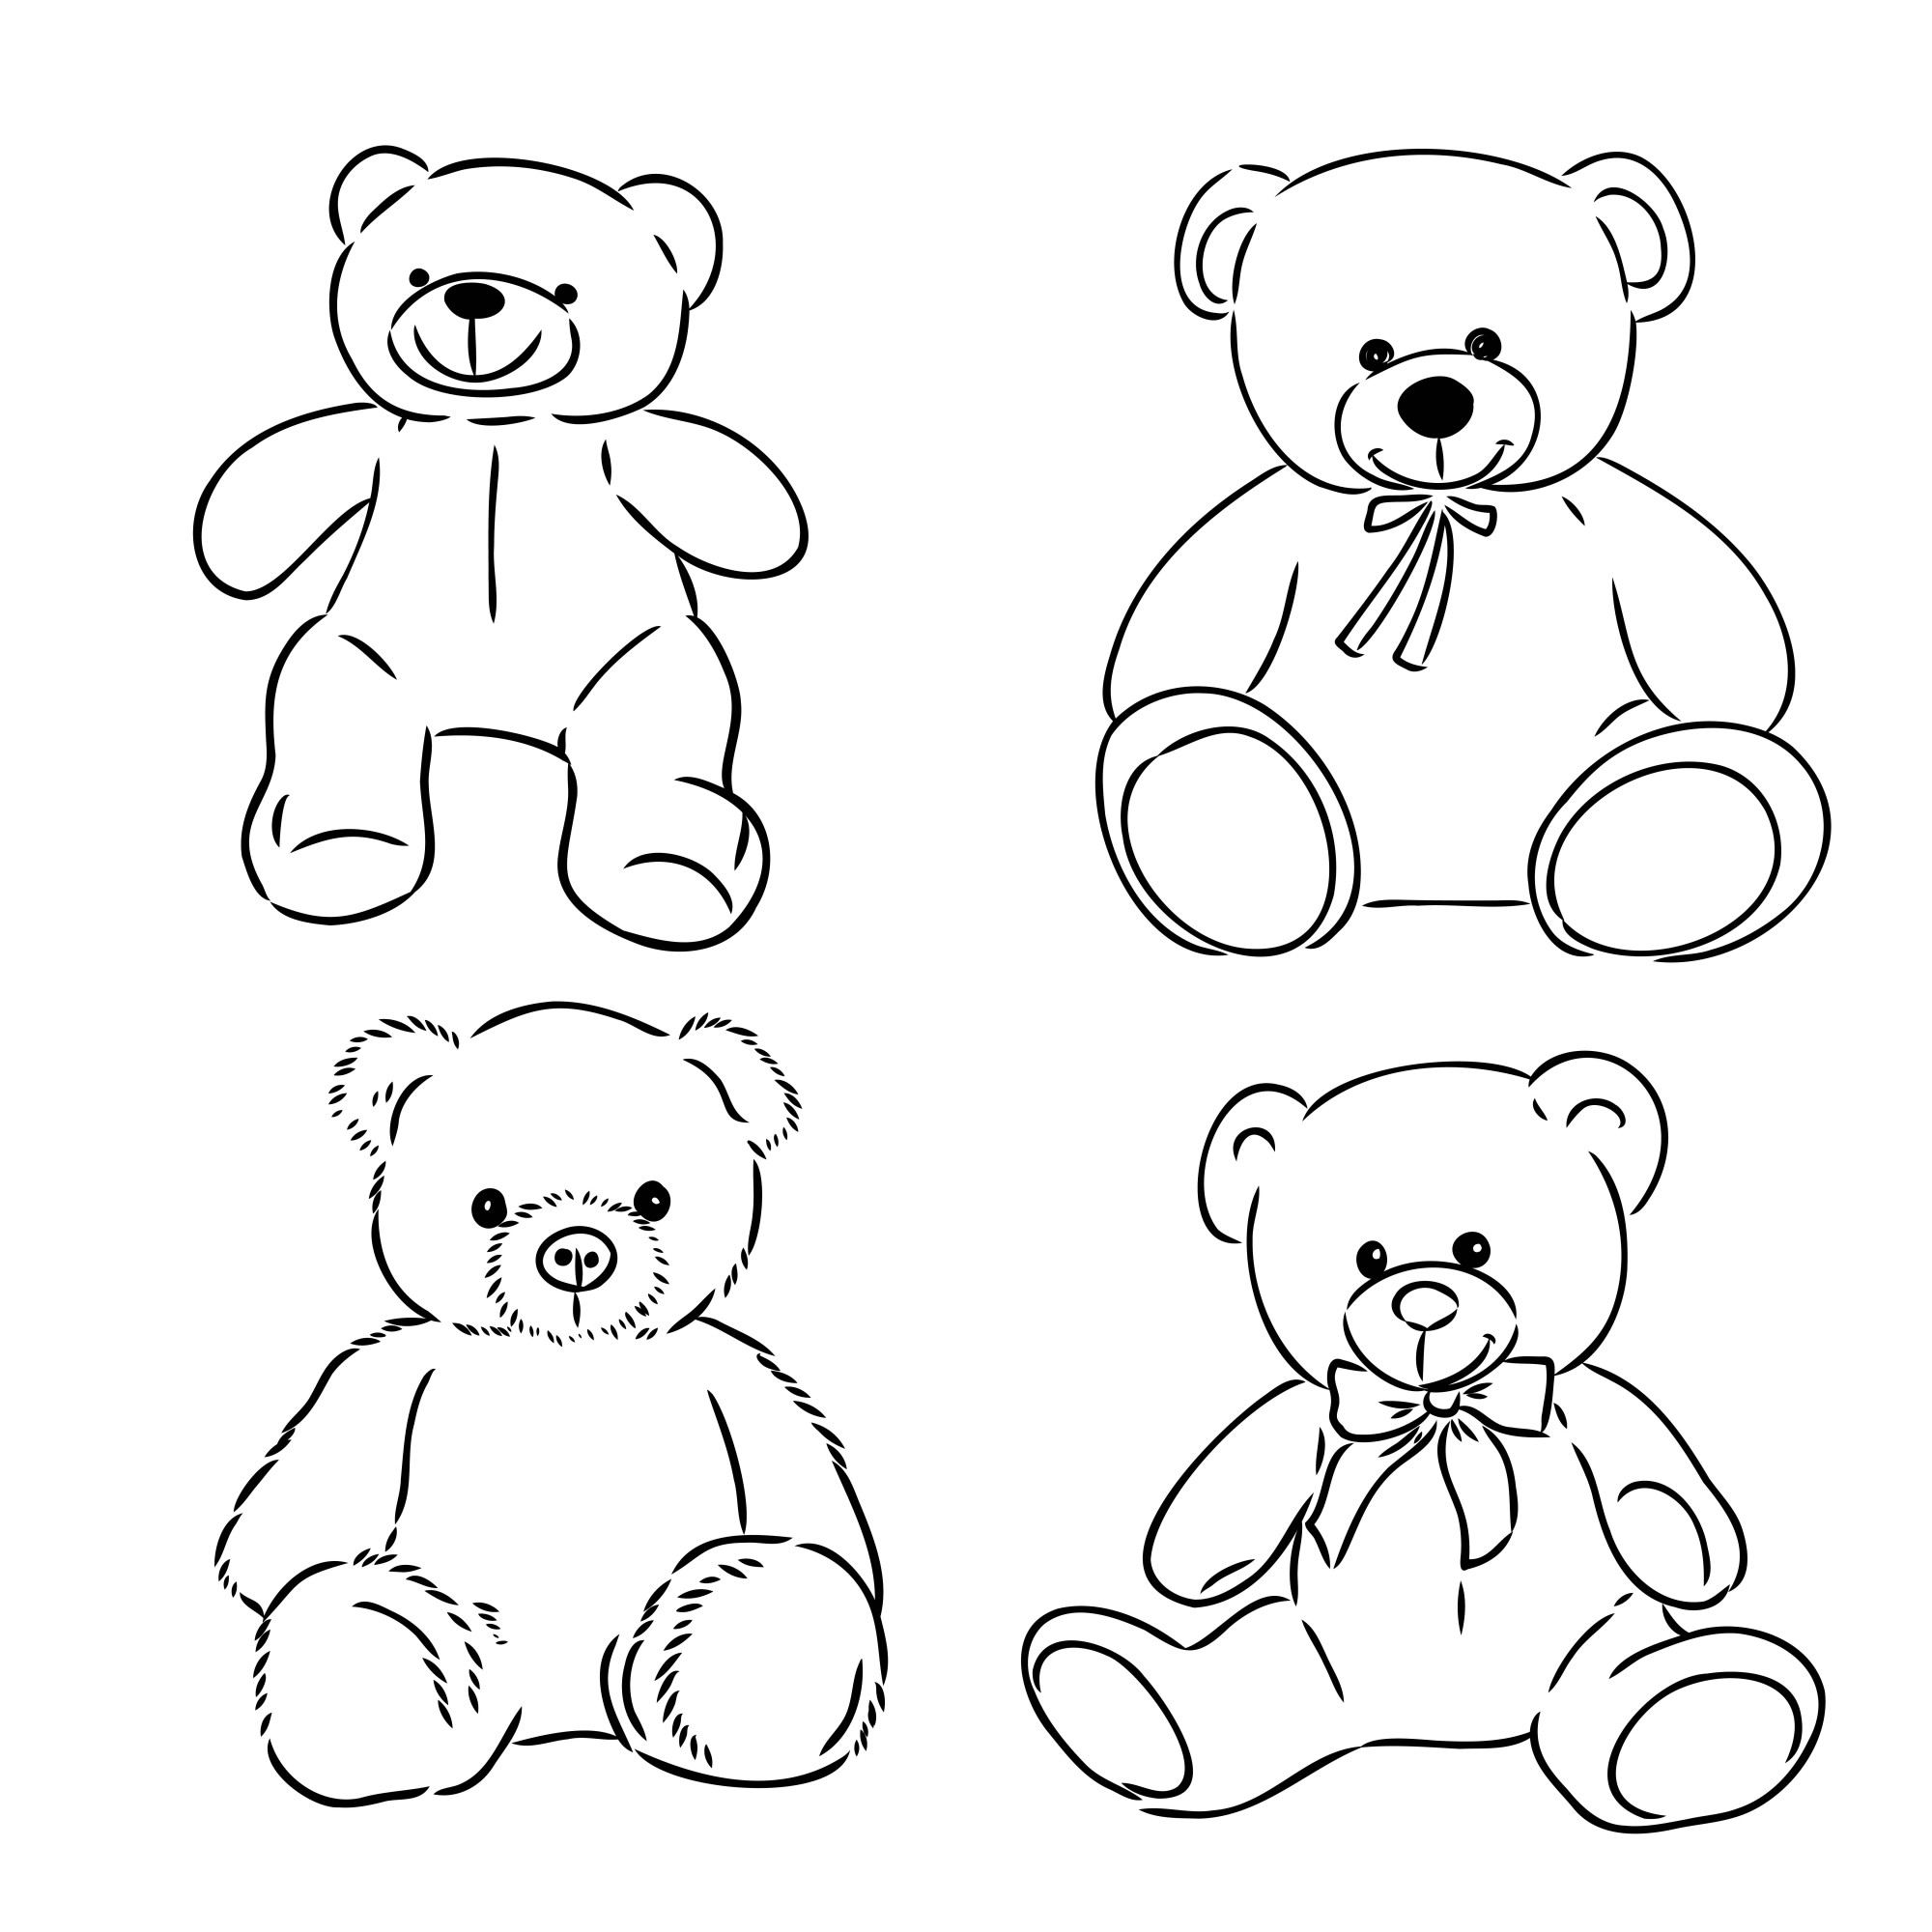 Раскраска для детей: куклы медведя